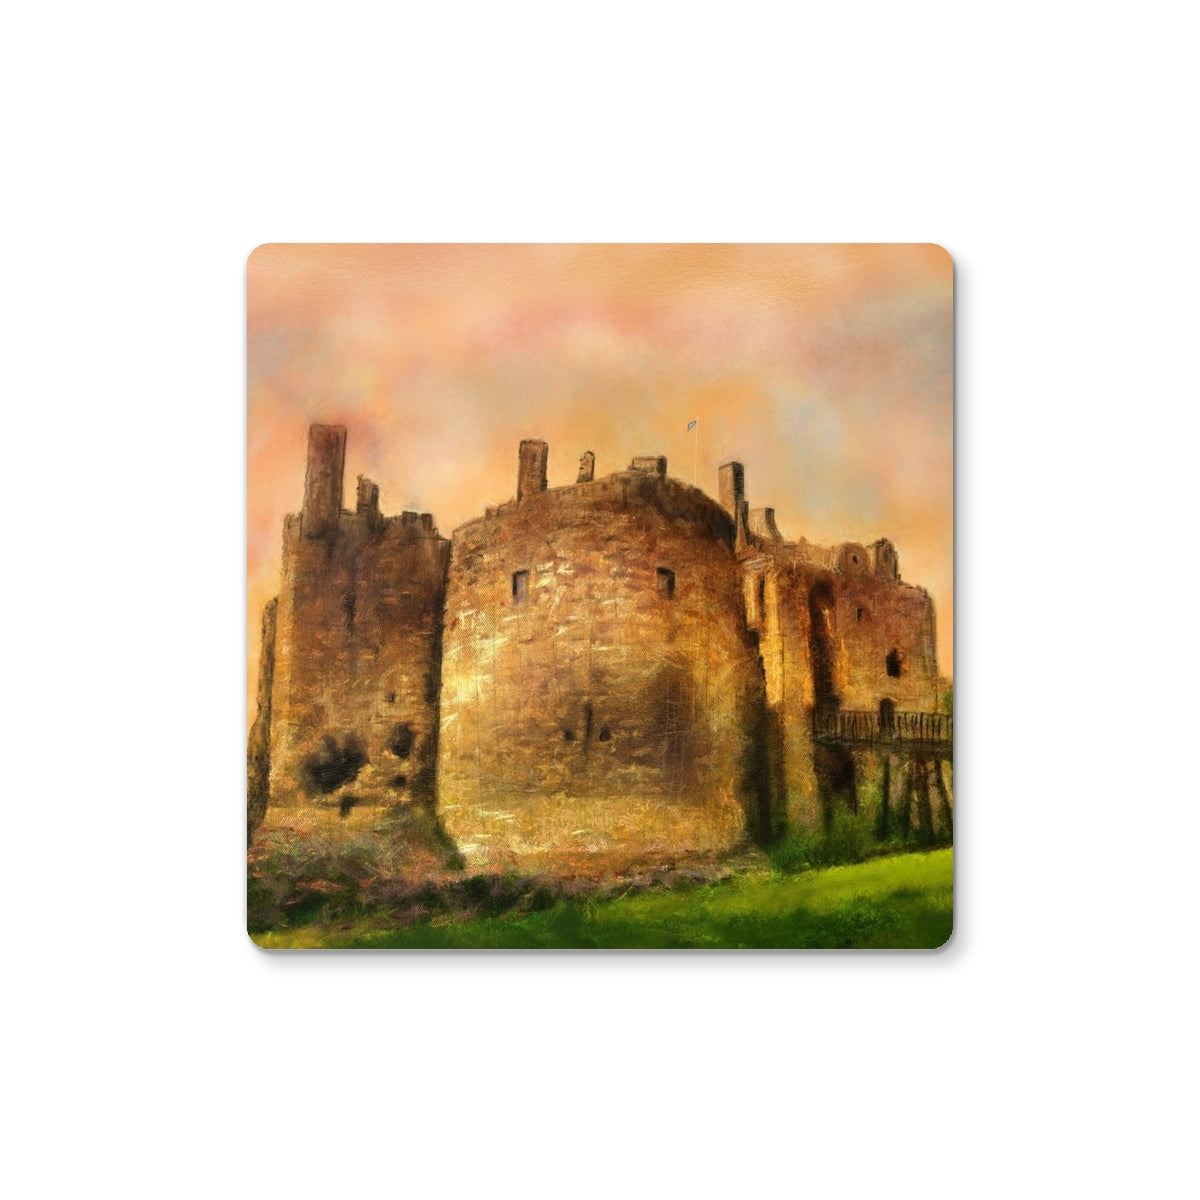 Dirleton Castle Art Gifts Coaster-Homeware-Prodigi-6 Coasters-Paintings, Prints, Homeware, Art Gifts From Scotland By Scottish Artist Kevin Hunter